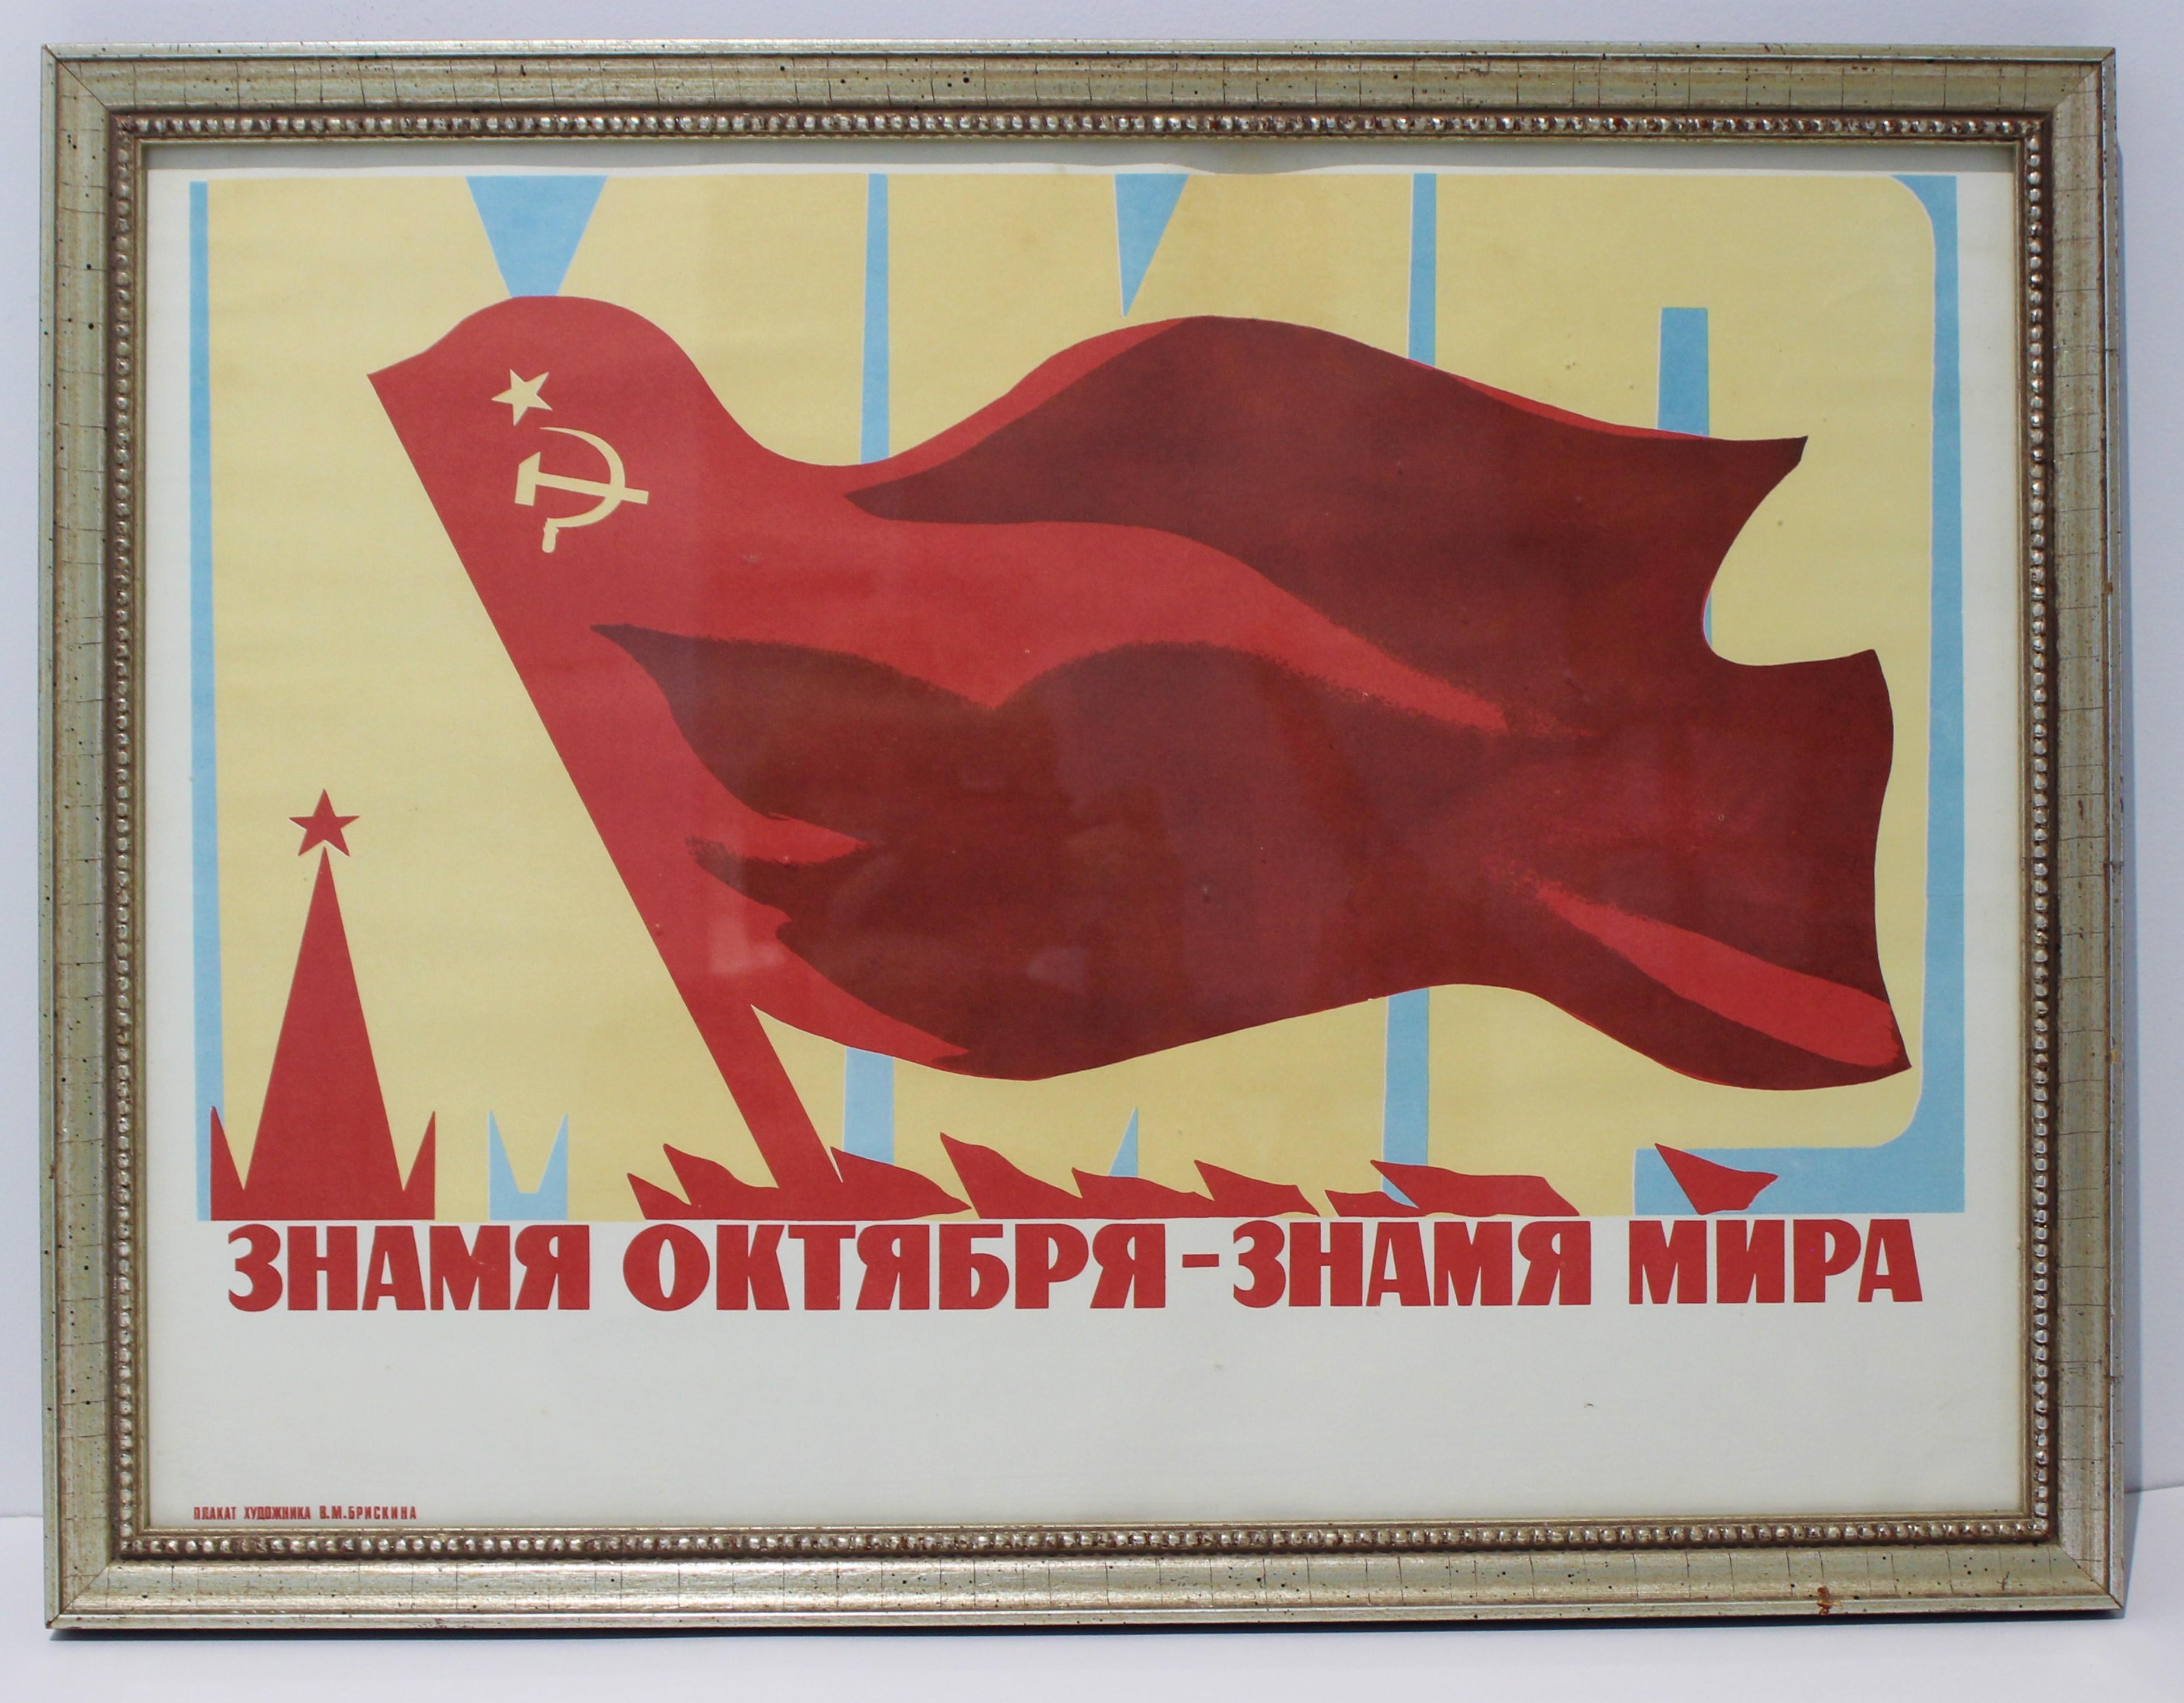 Paper 1970s Soviet Union Poster